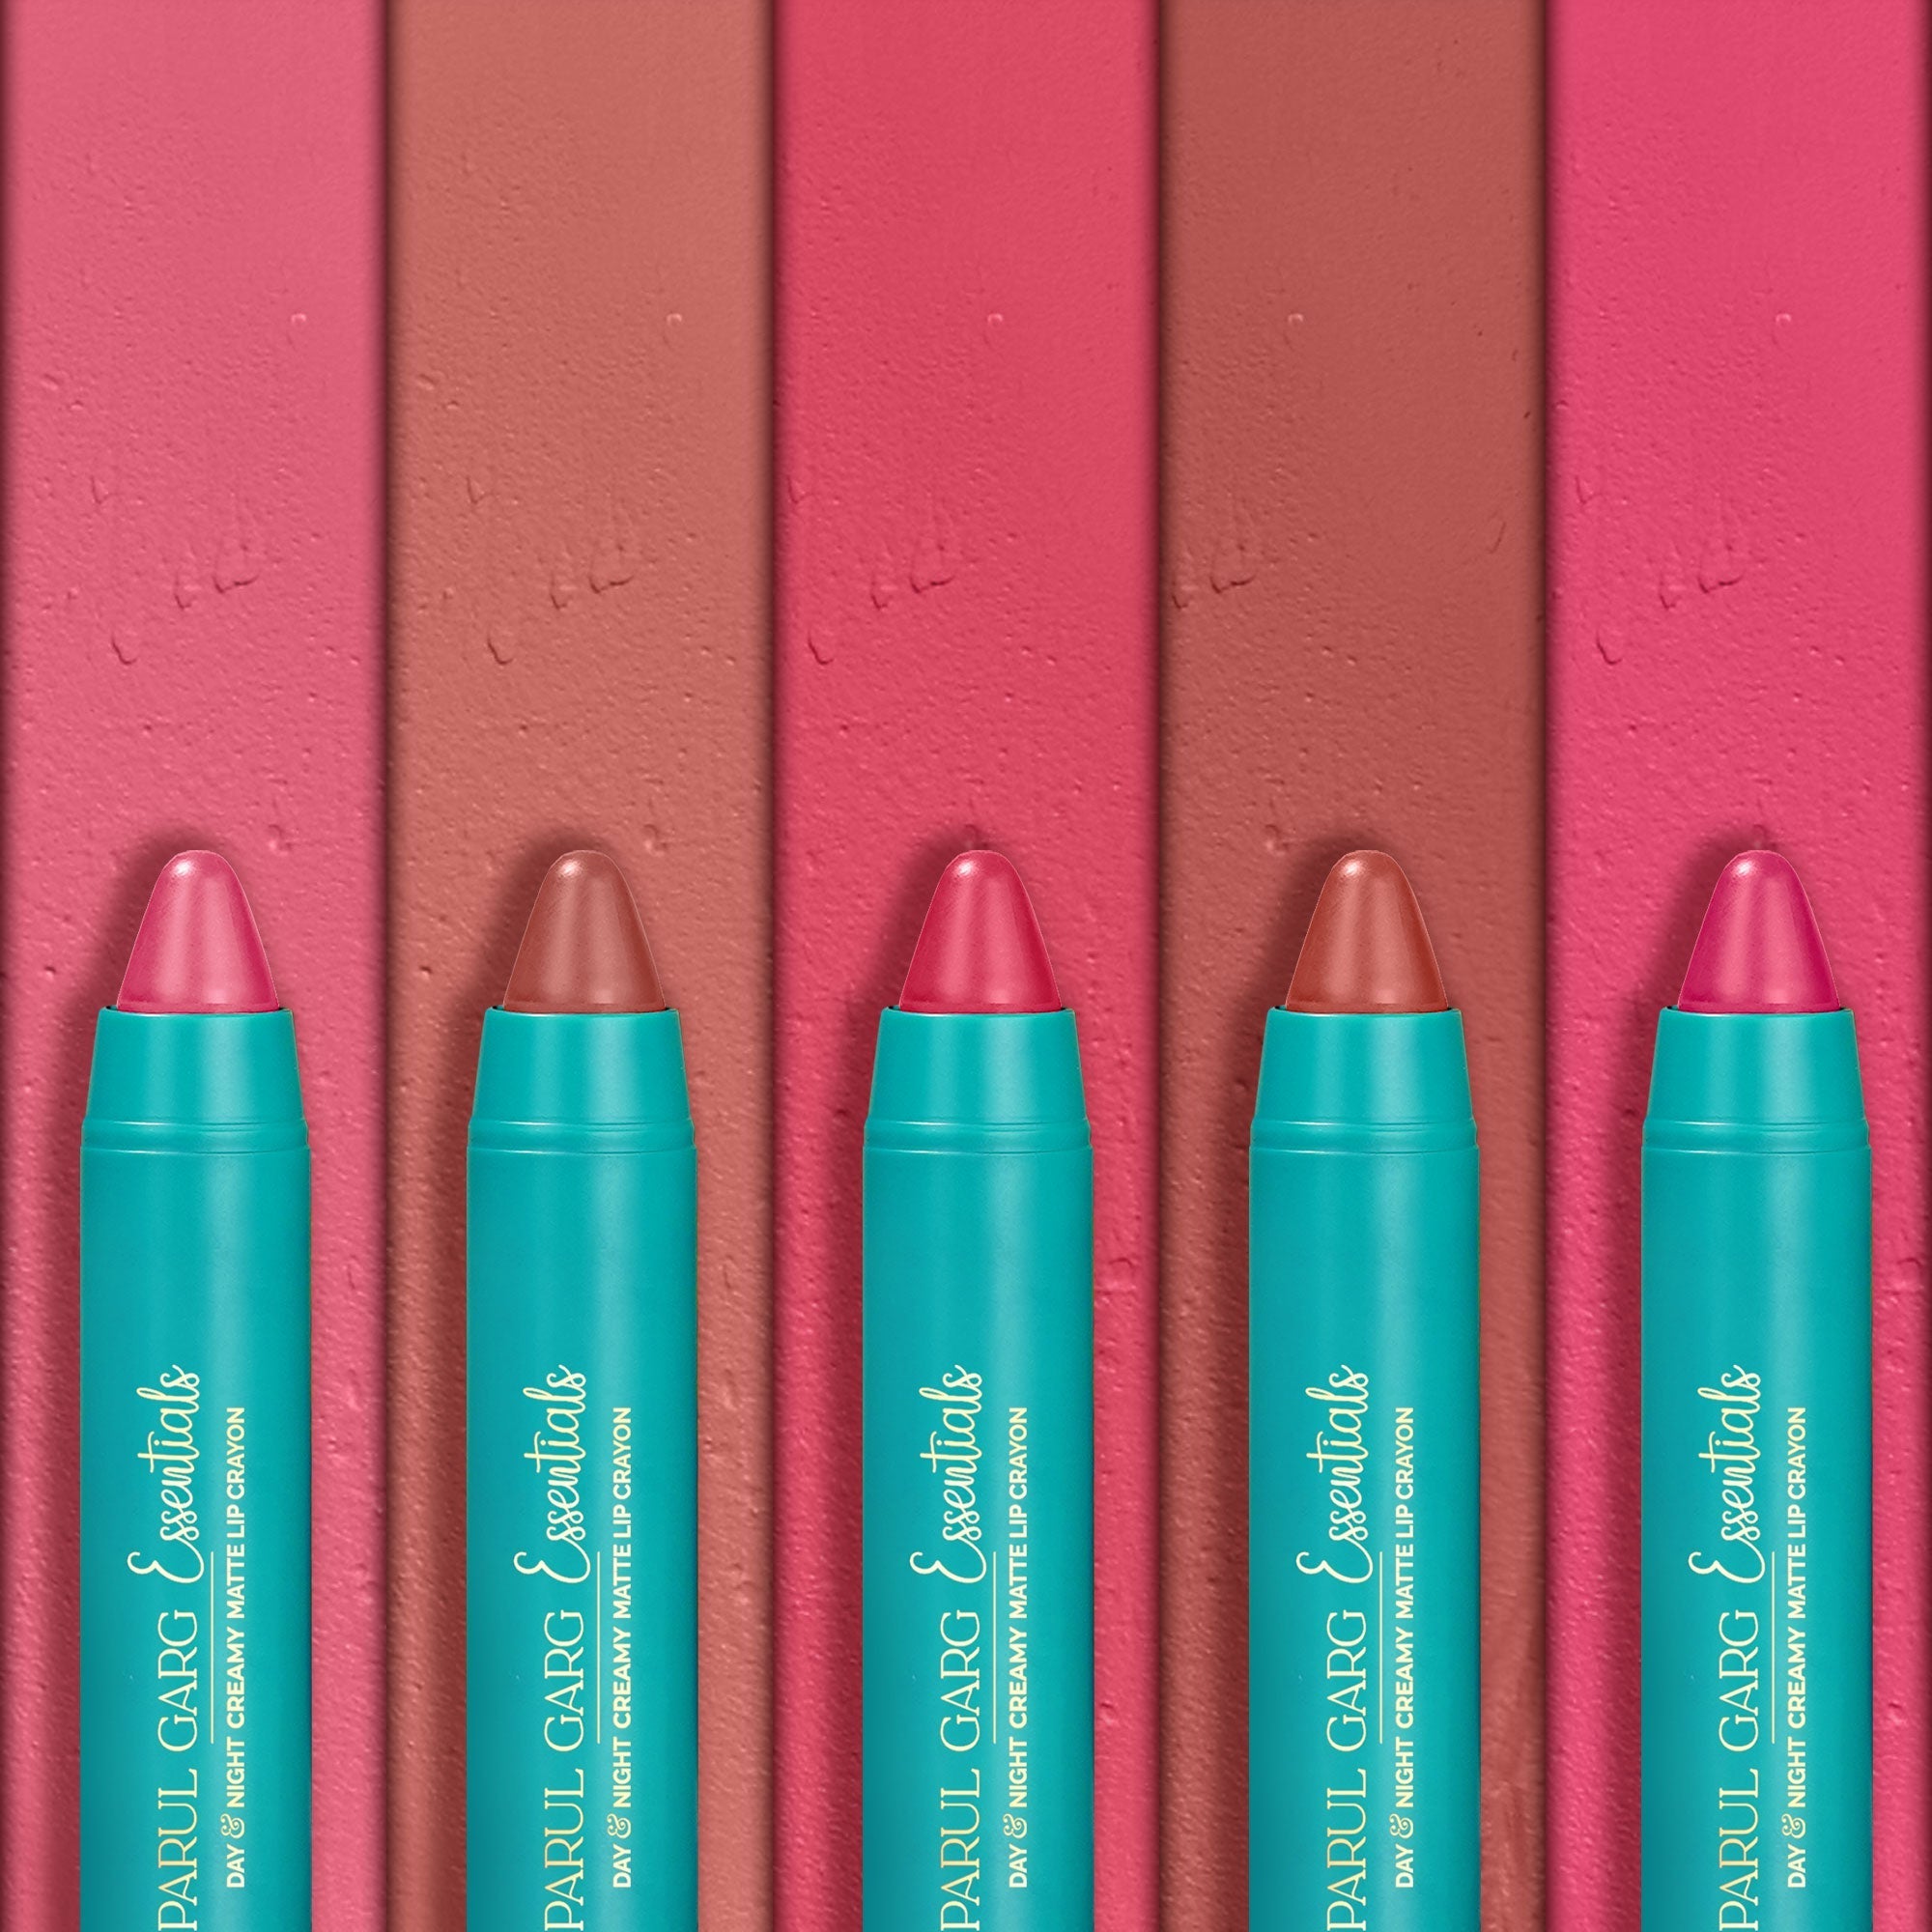 College Essentials: Pack-of-Five Creamy Matte Lip Crayons